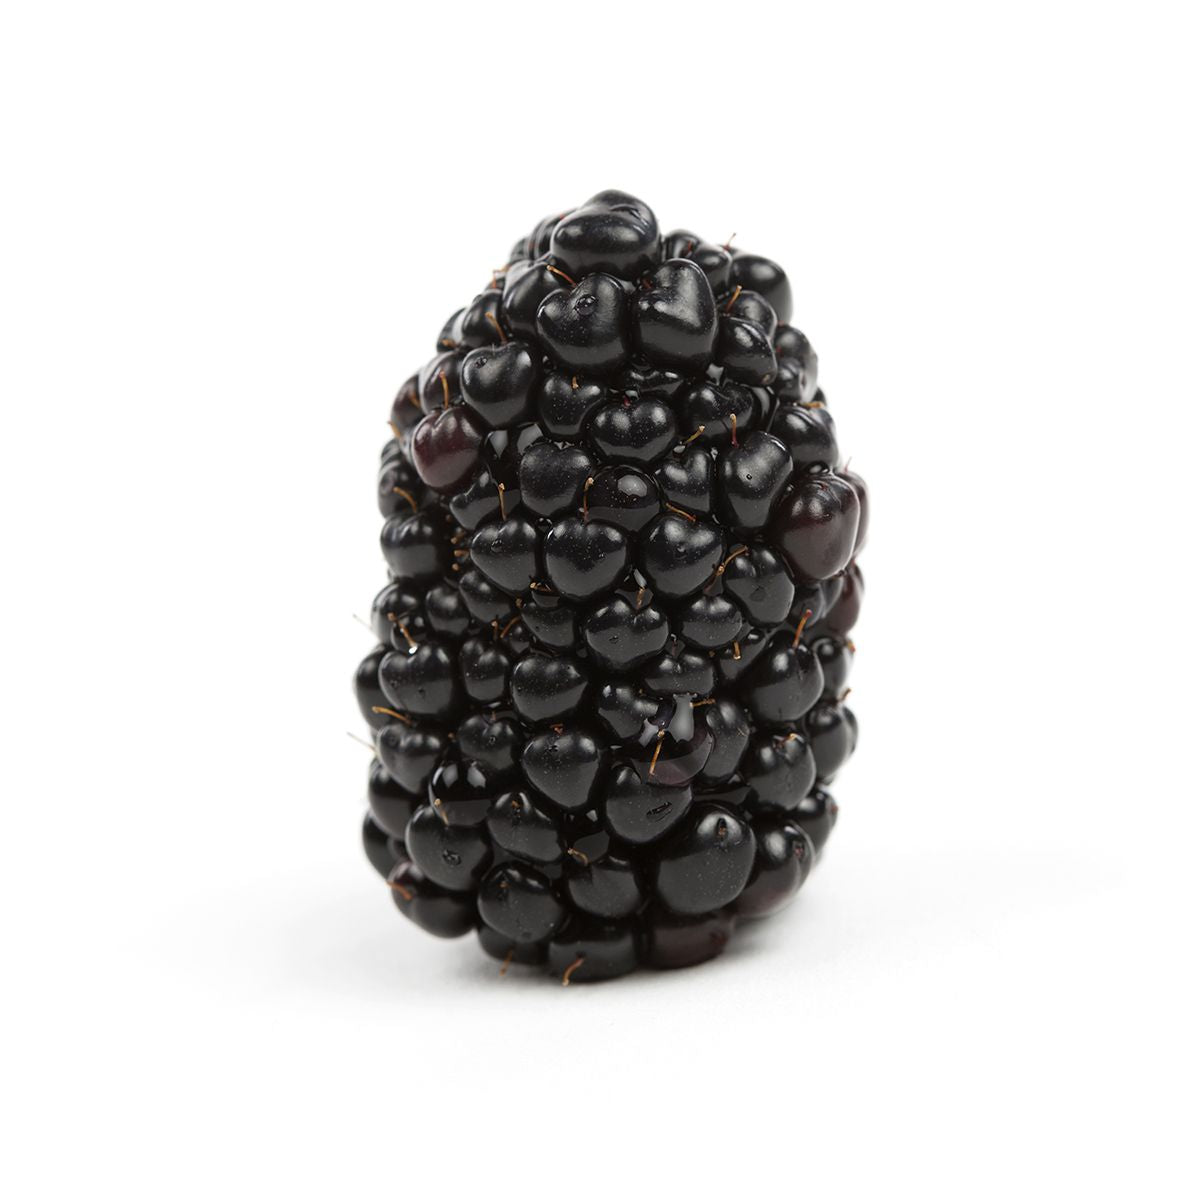 Driscoll'S Organic Blackberries 6 OZ